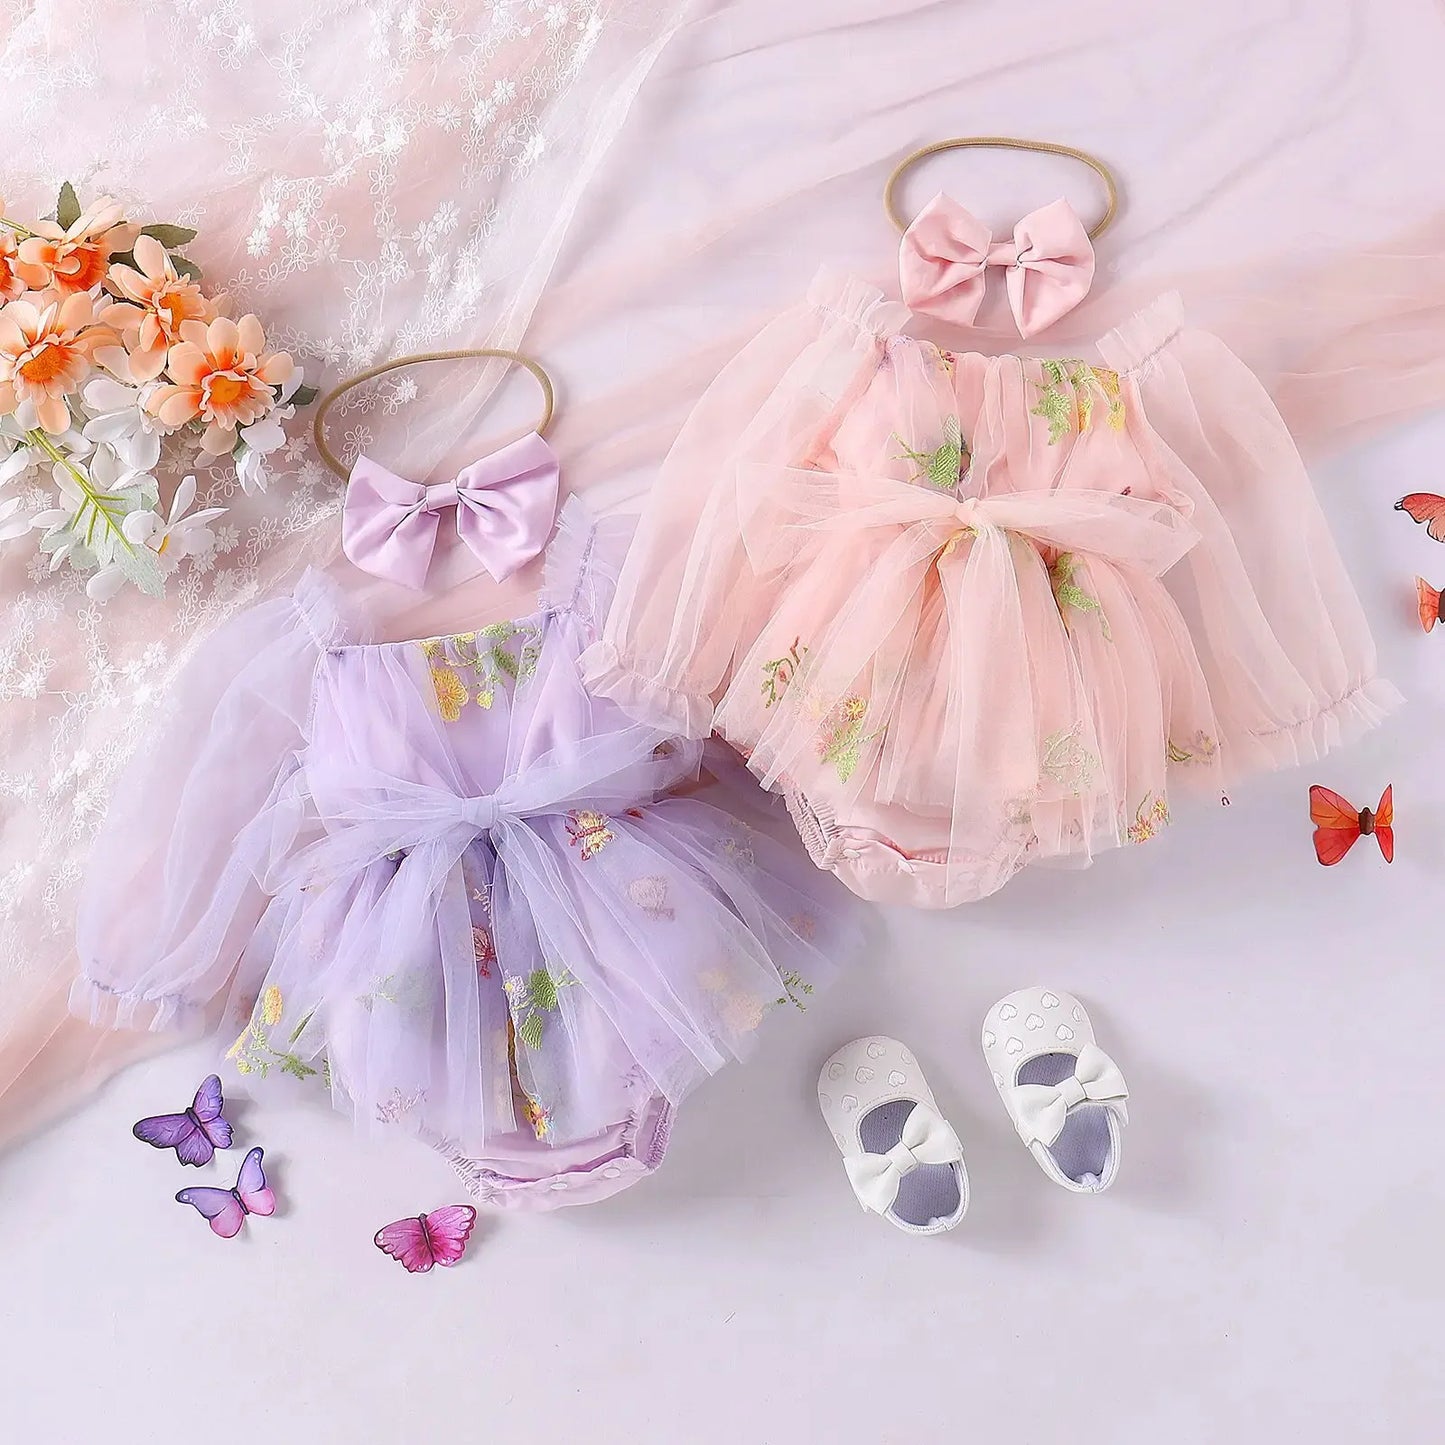 Enchanting Elegance: Floral Laced Newborn Romper for Your Little Princess